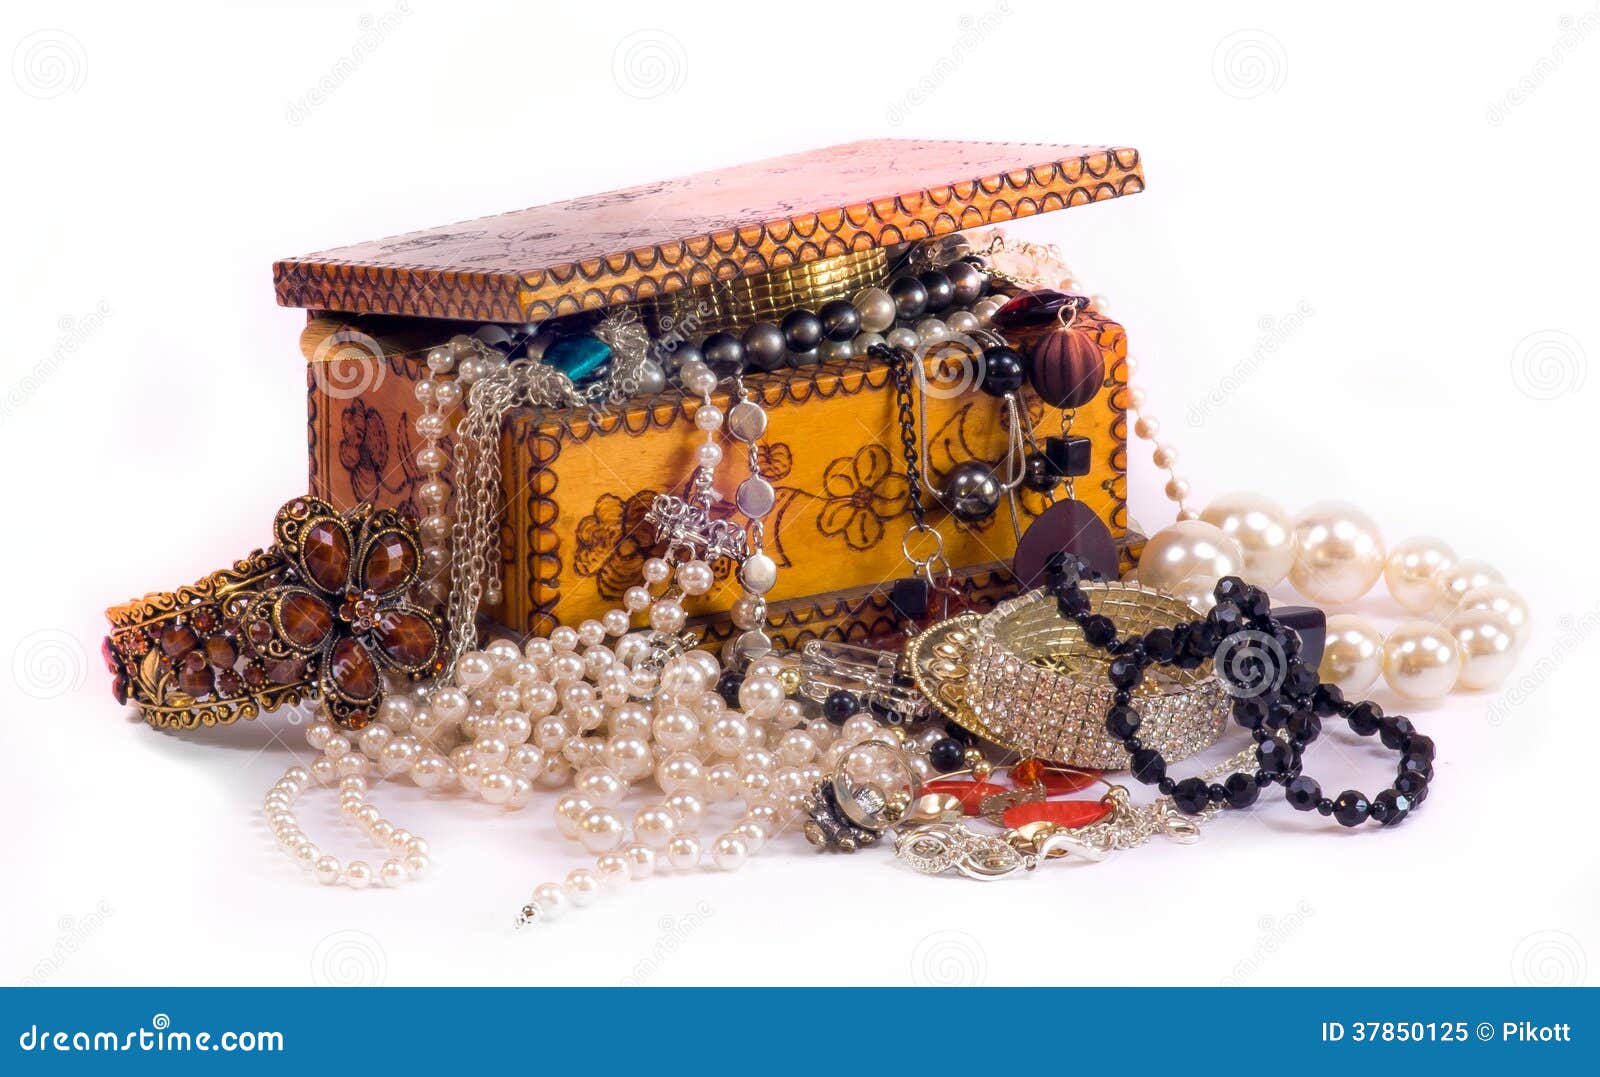 jewelry and a jewelry box